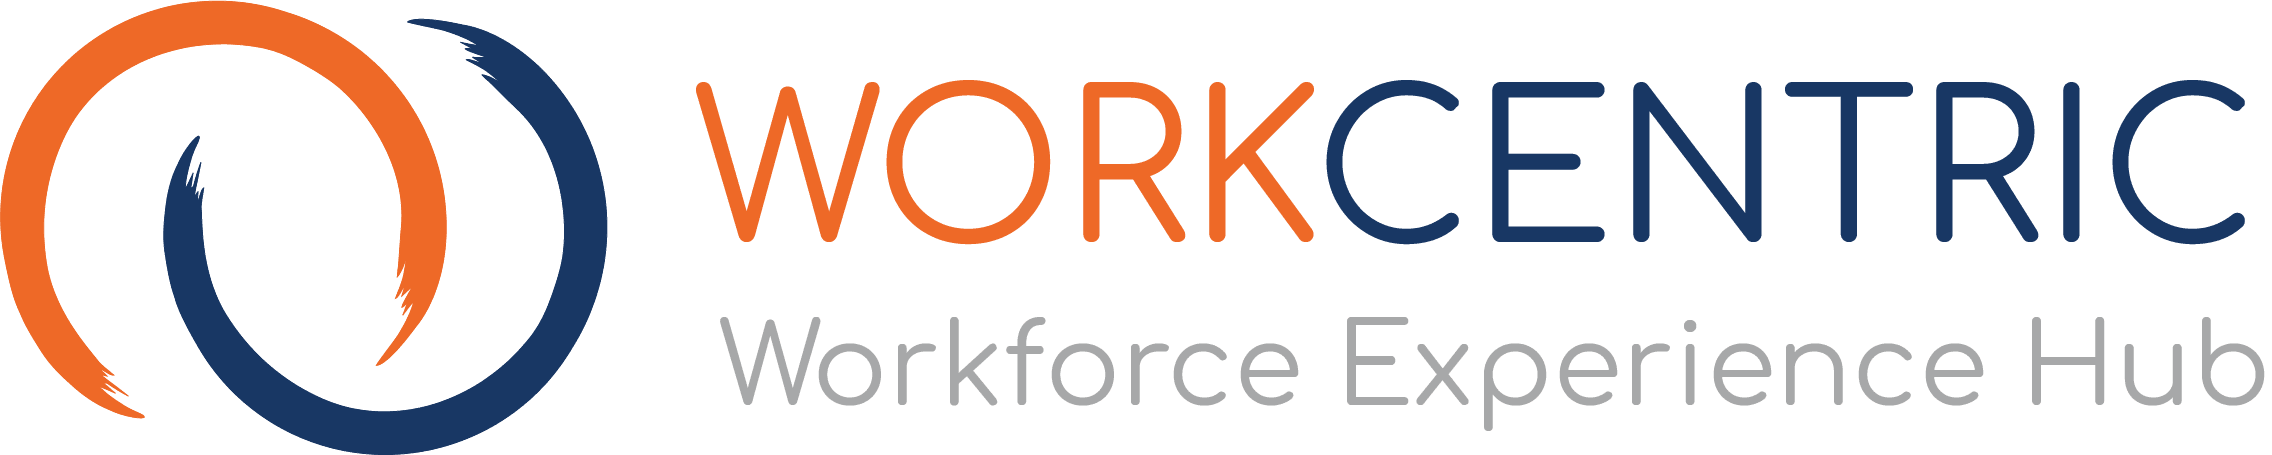 workcentric logo